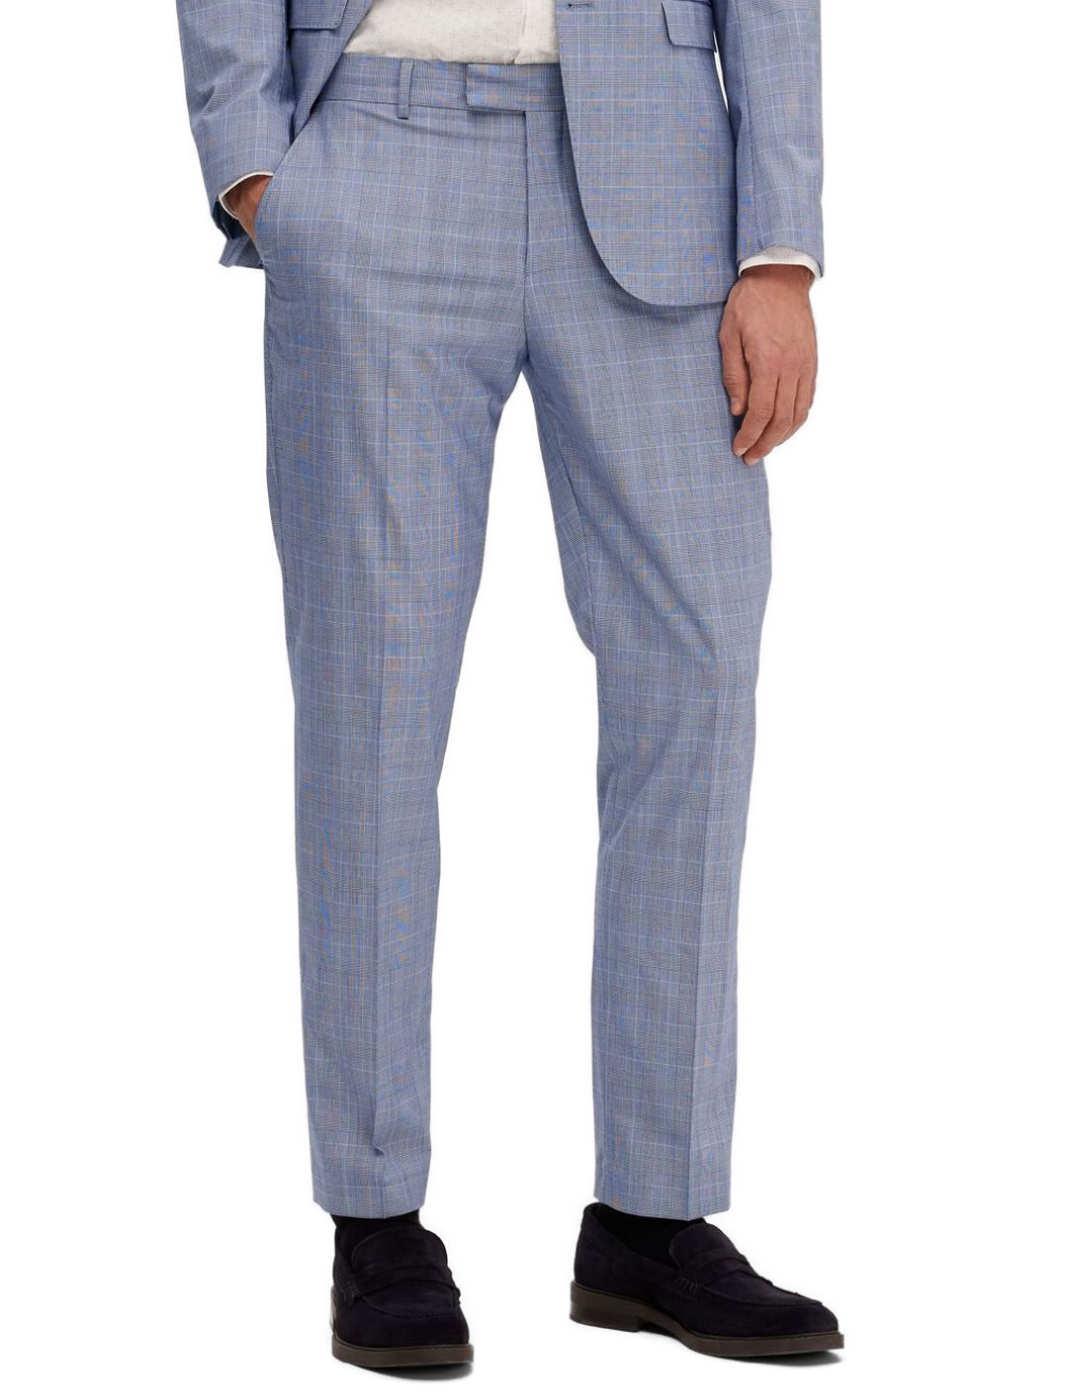 Pantalon Selected traje Ryde slim azul cuadros de hombre